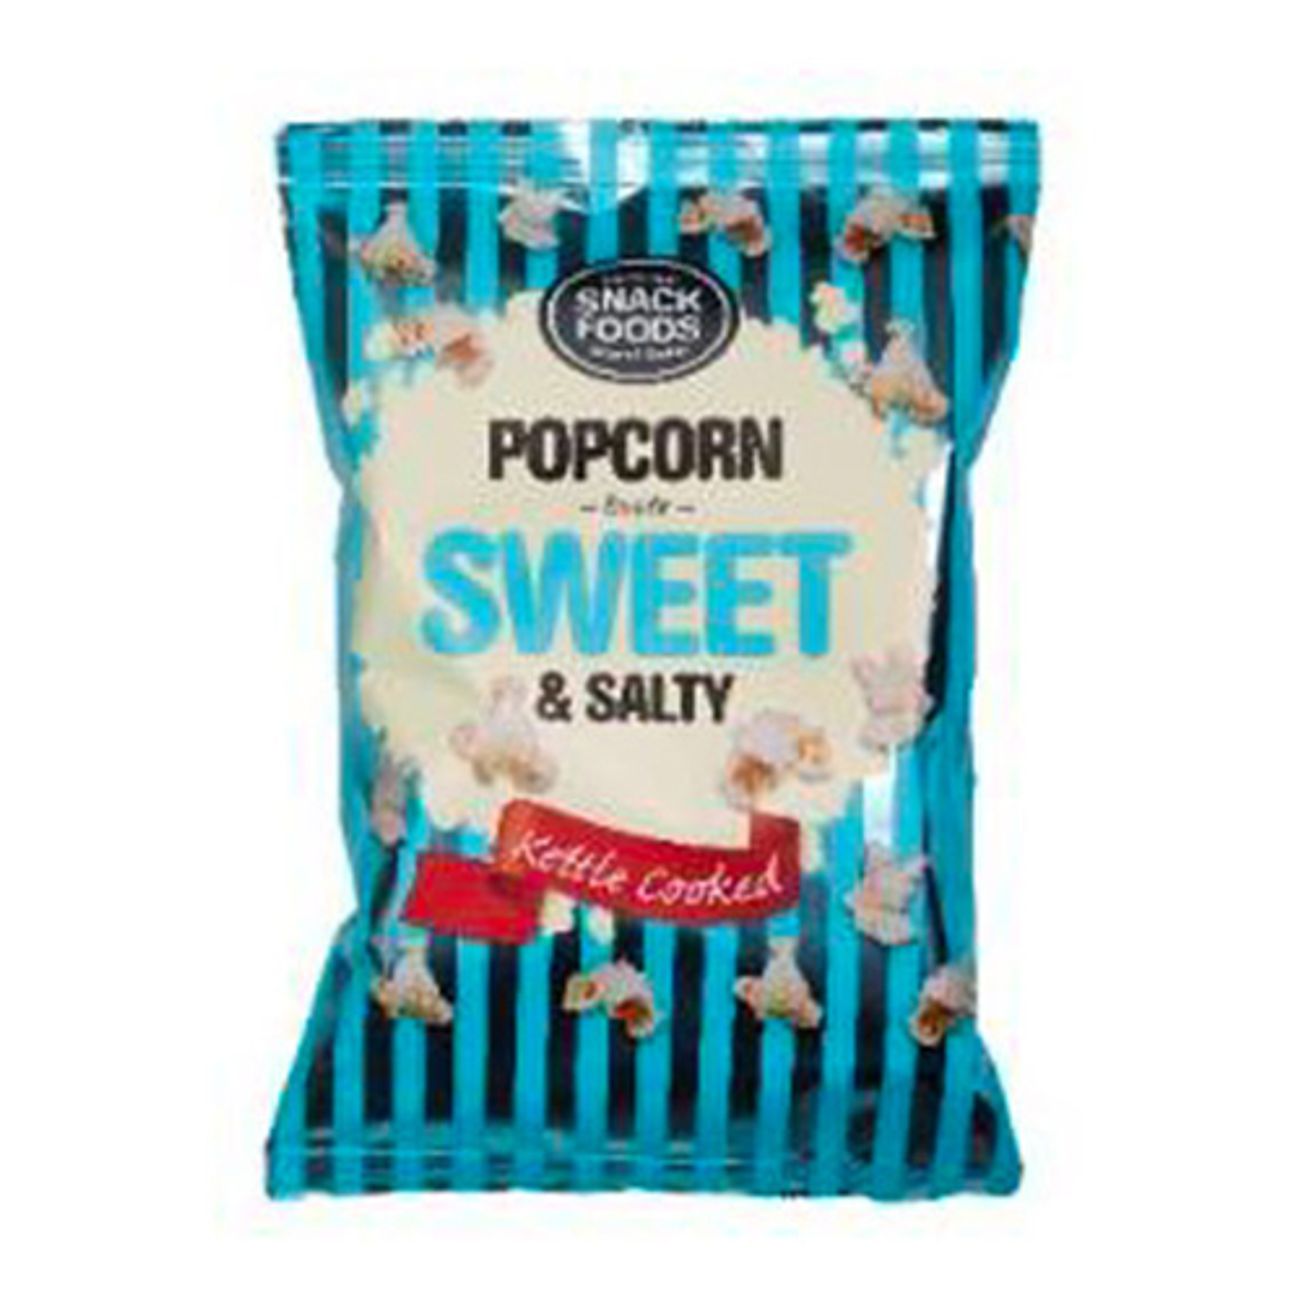 snacks-foods-popcorn-sweet-salty-1